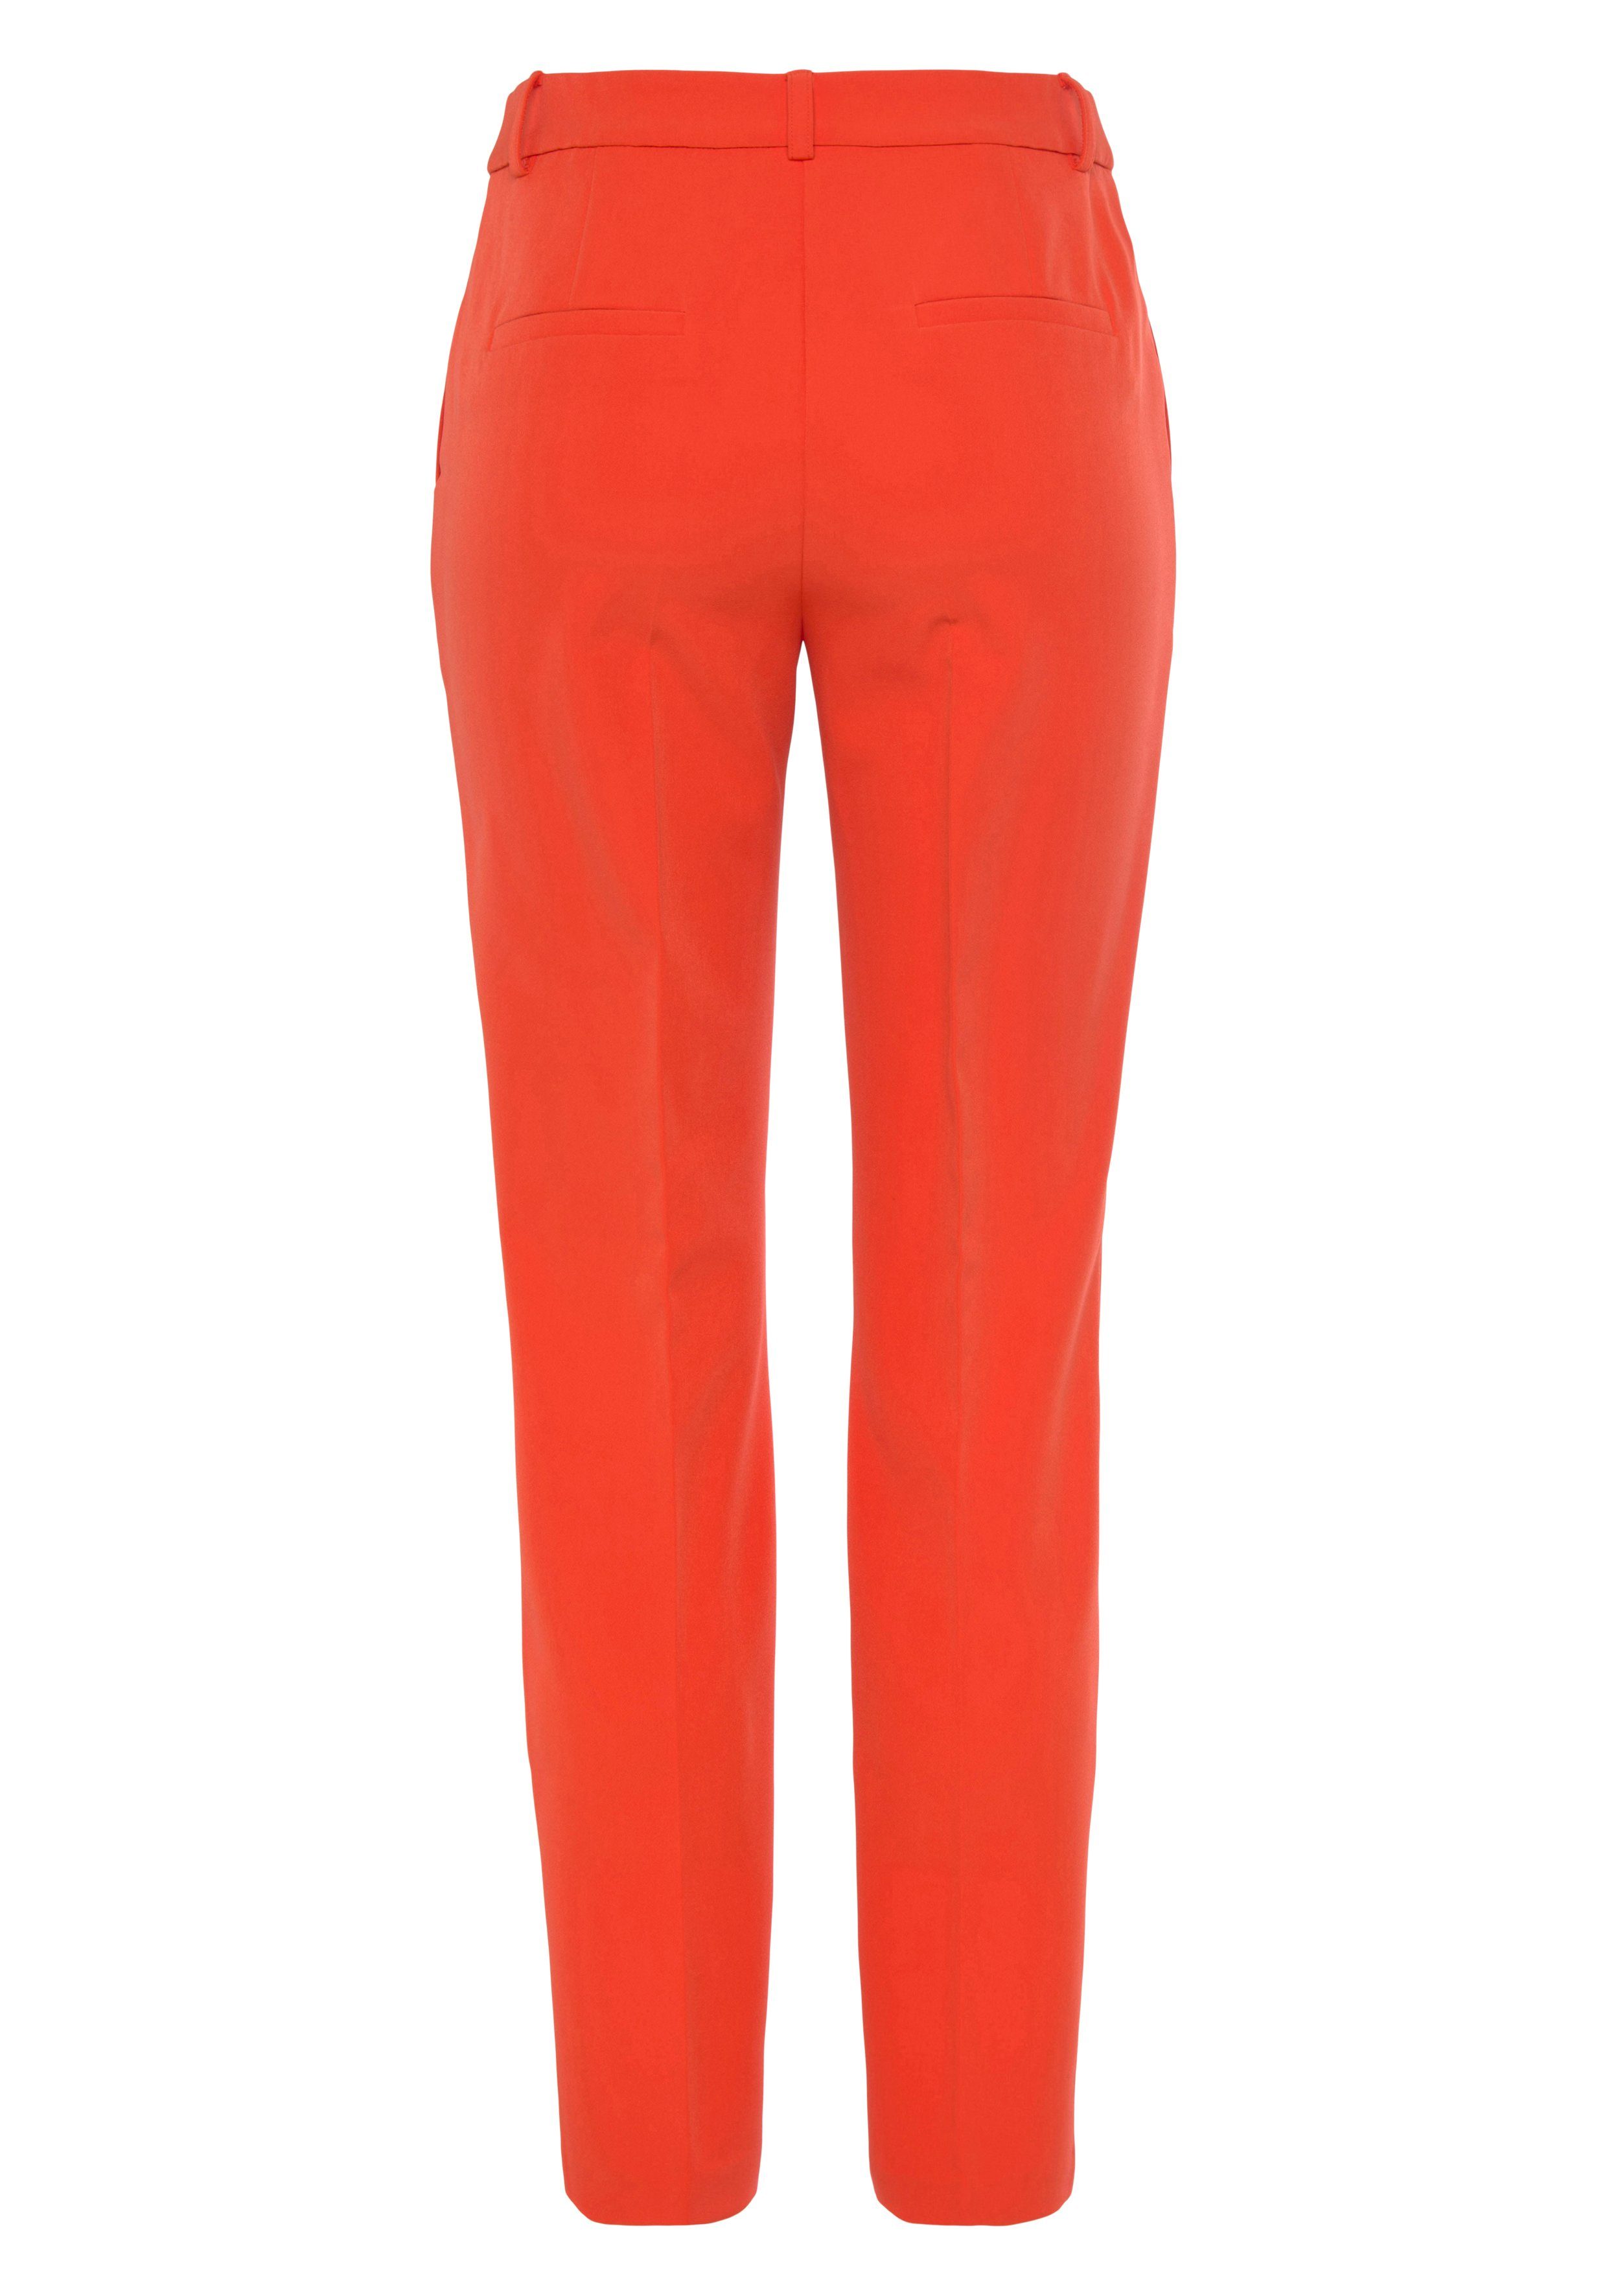 Tamaris Anzughose in Trendfarben orange Material) aus nachhaltigem (Hose